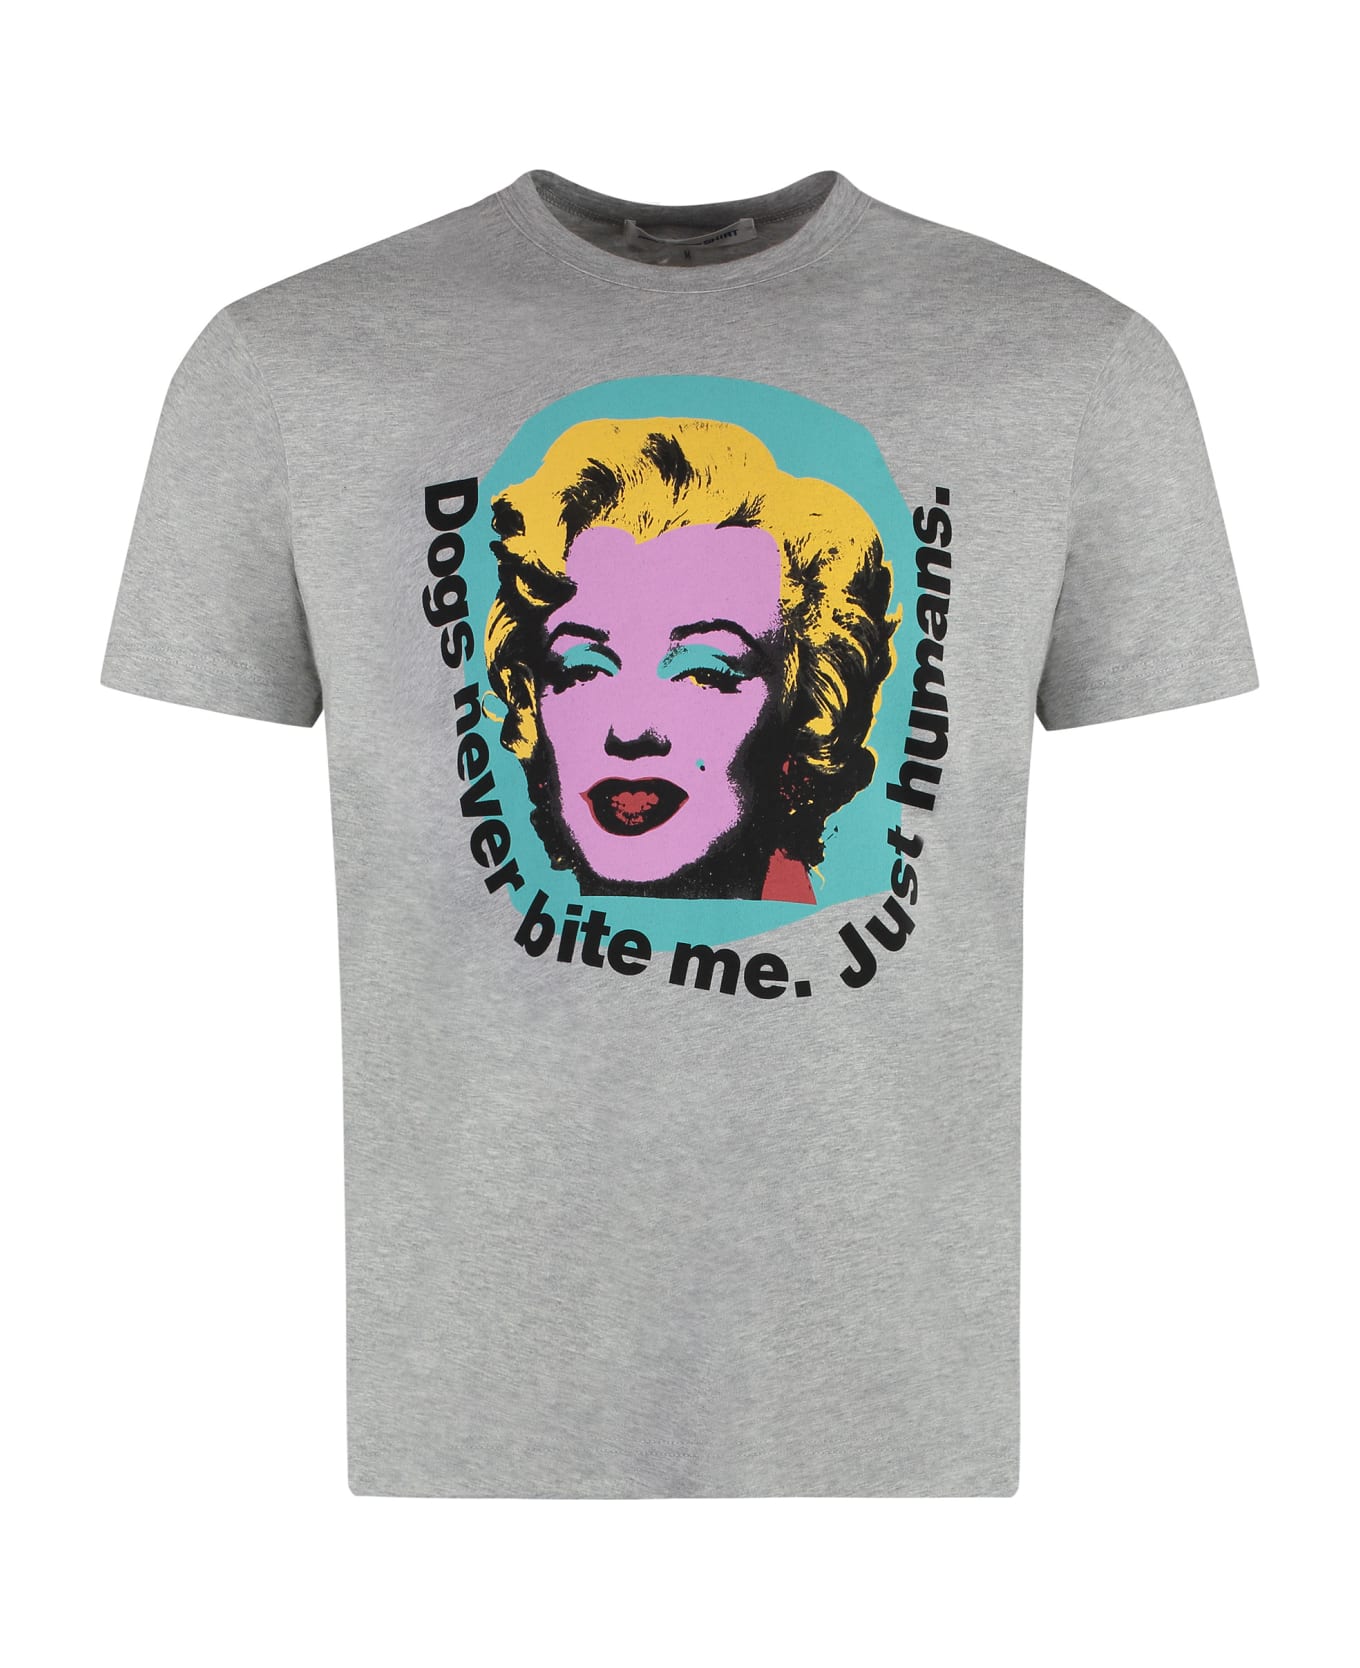 Comme des Garçons Andy Warhol Print Cotton T-shirt - TOP GREY